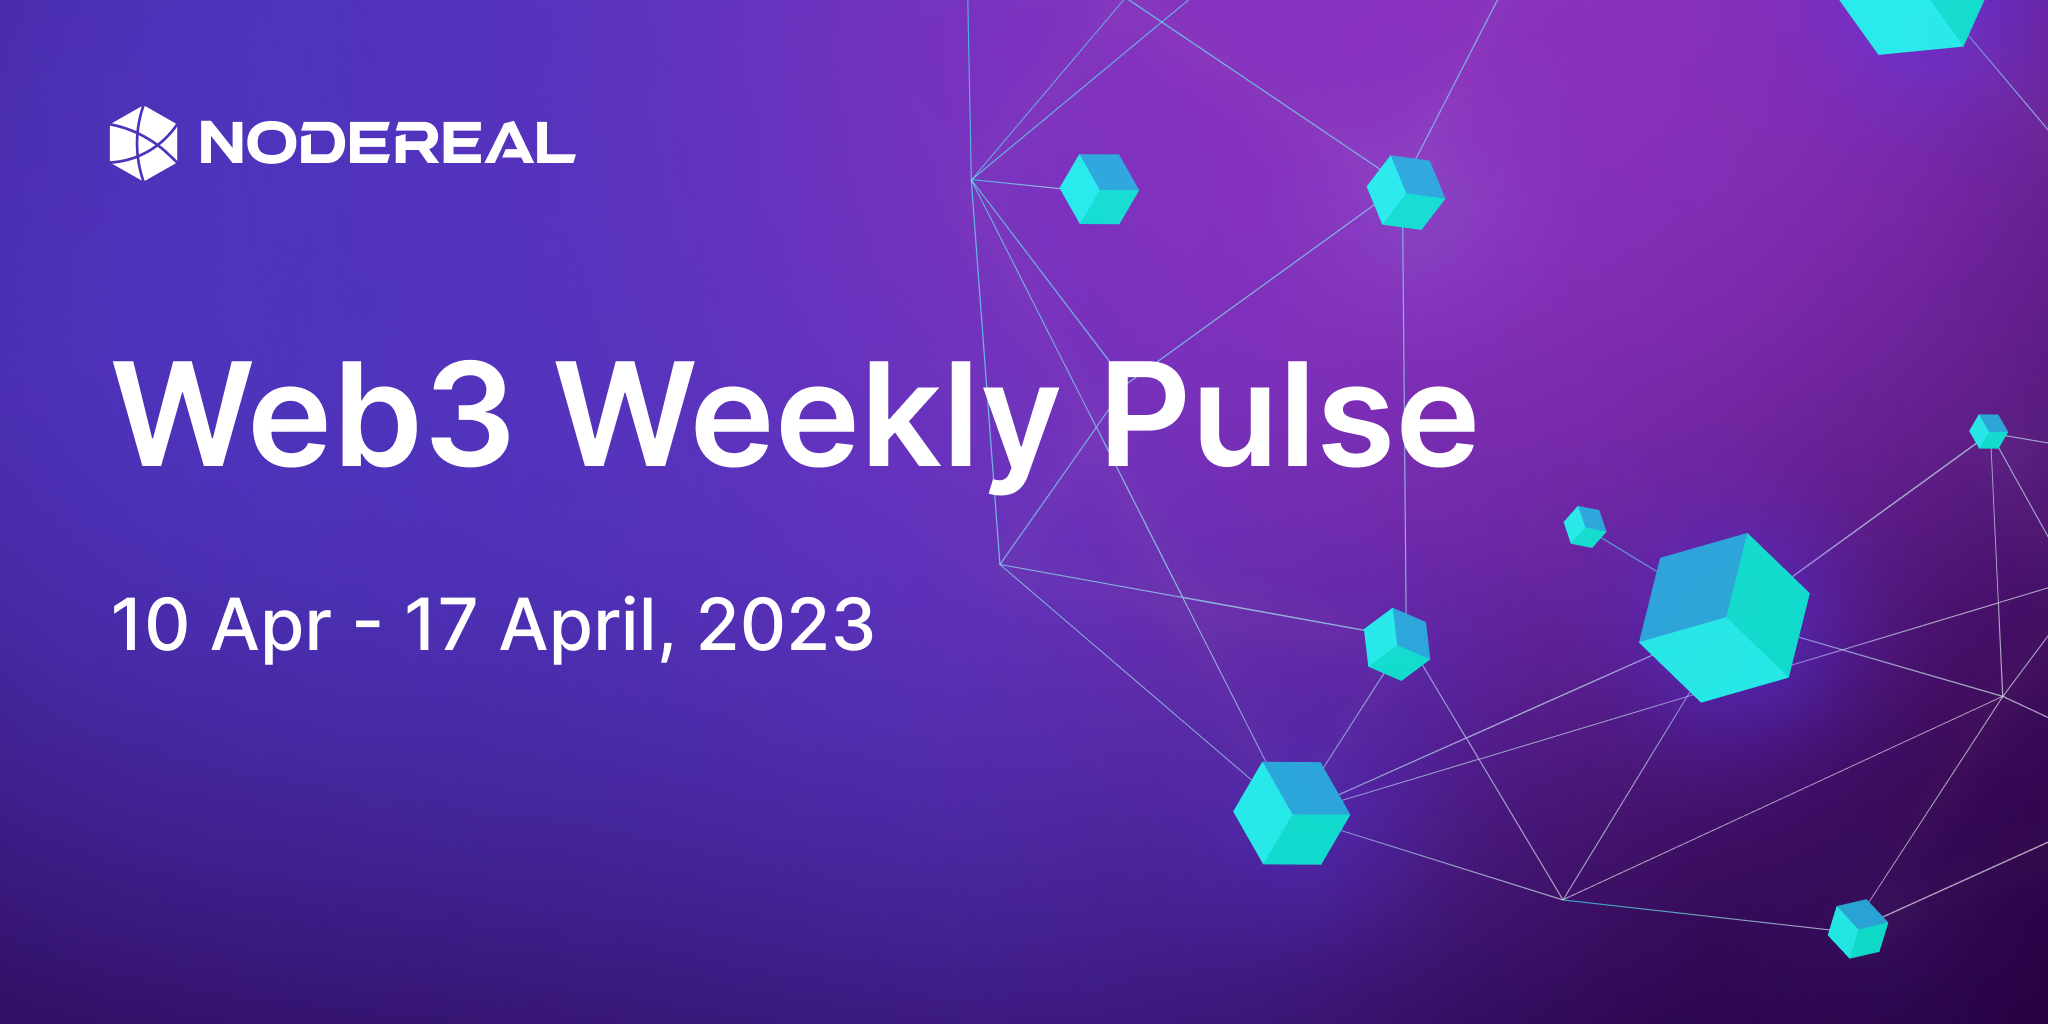 Web3 Weekly Pulse: 10 - 17 Apr 2023